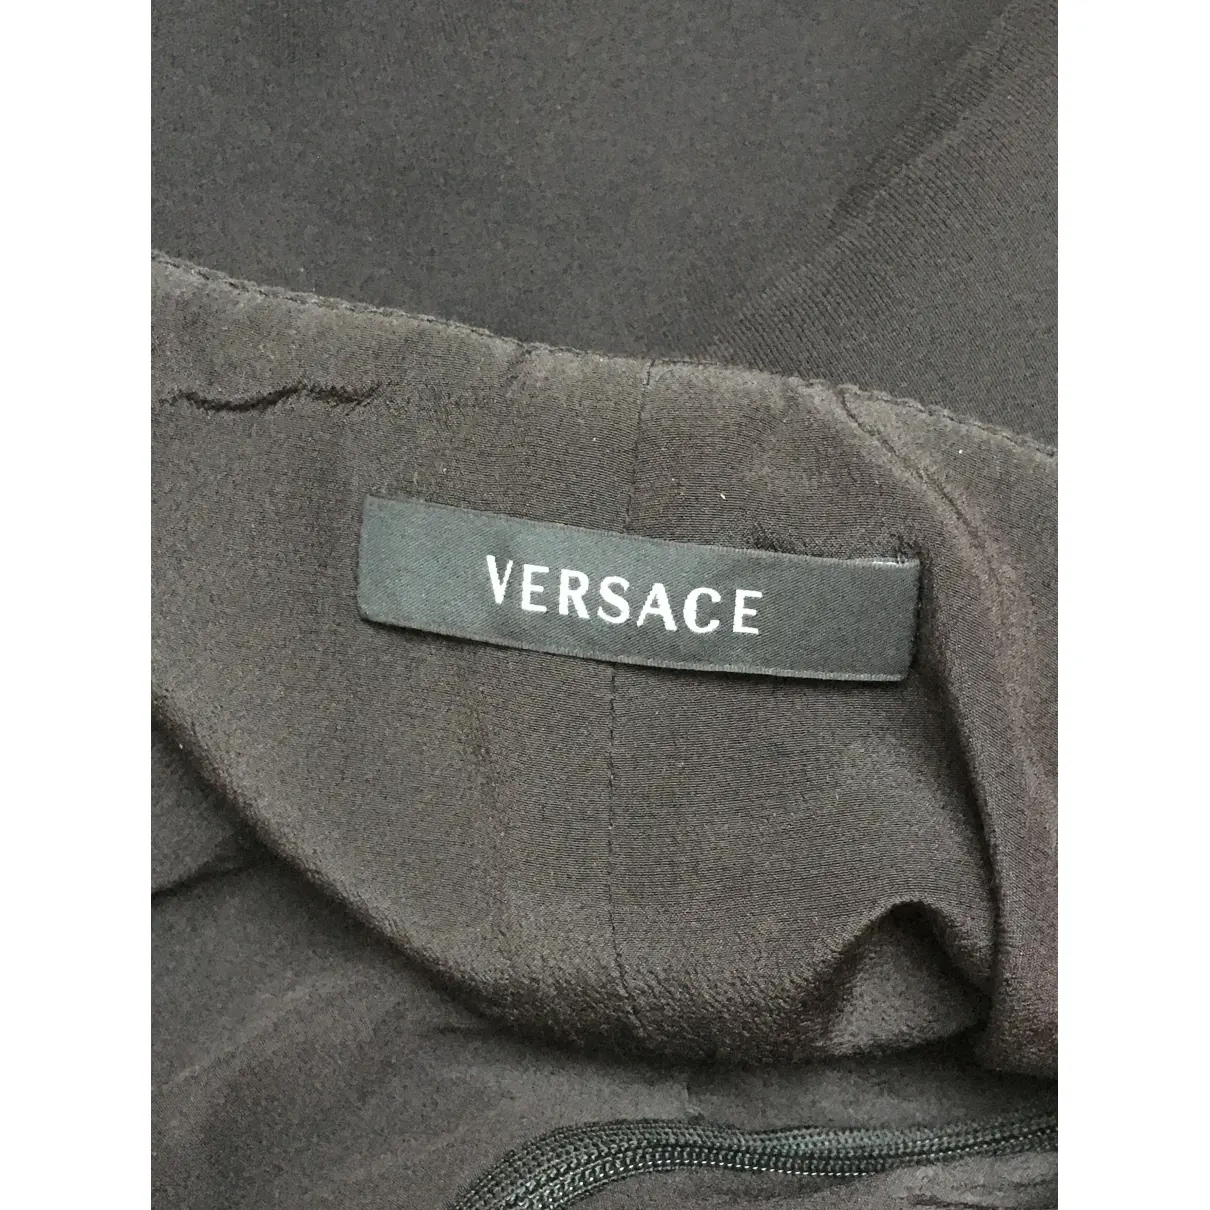 Buy Versace Silk mini dress online